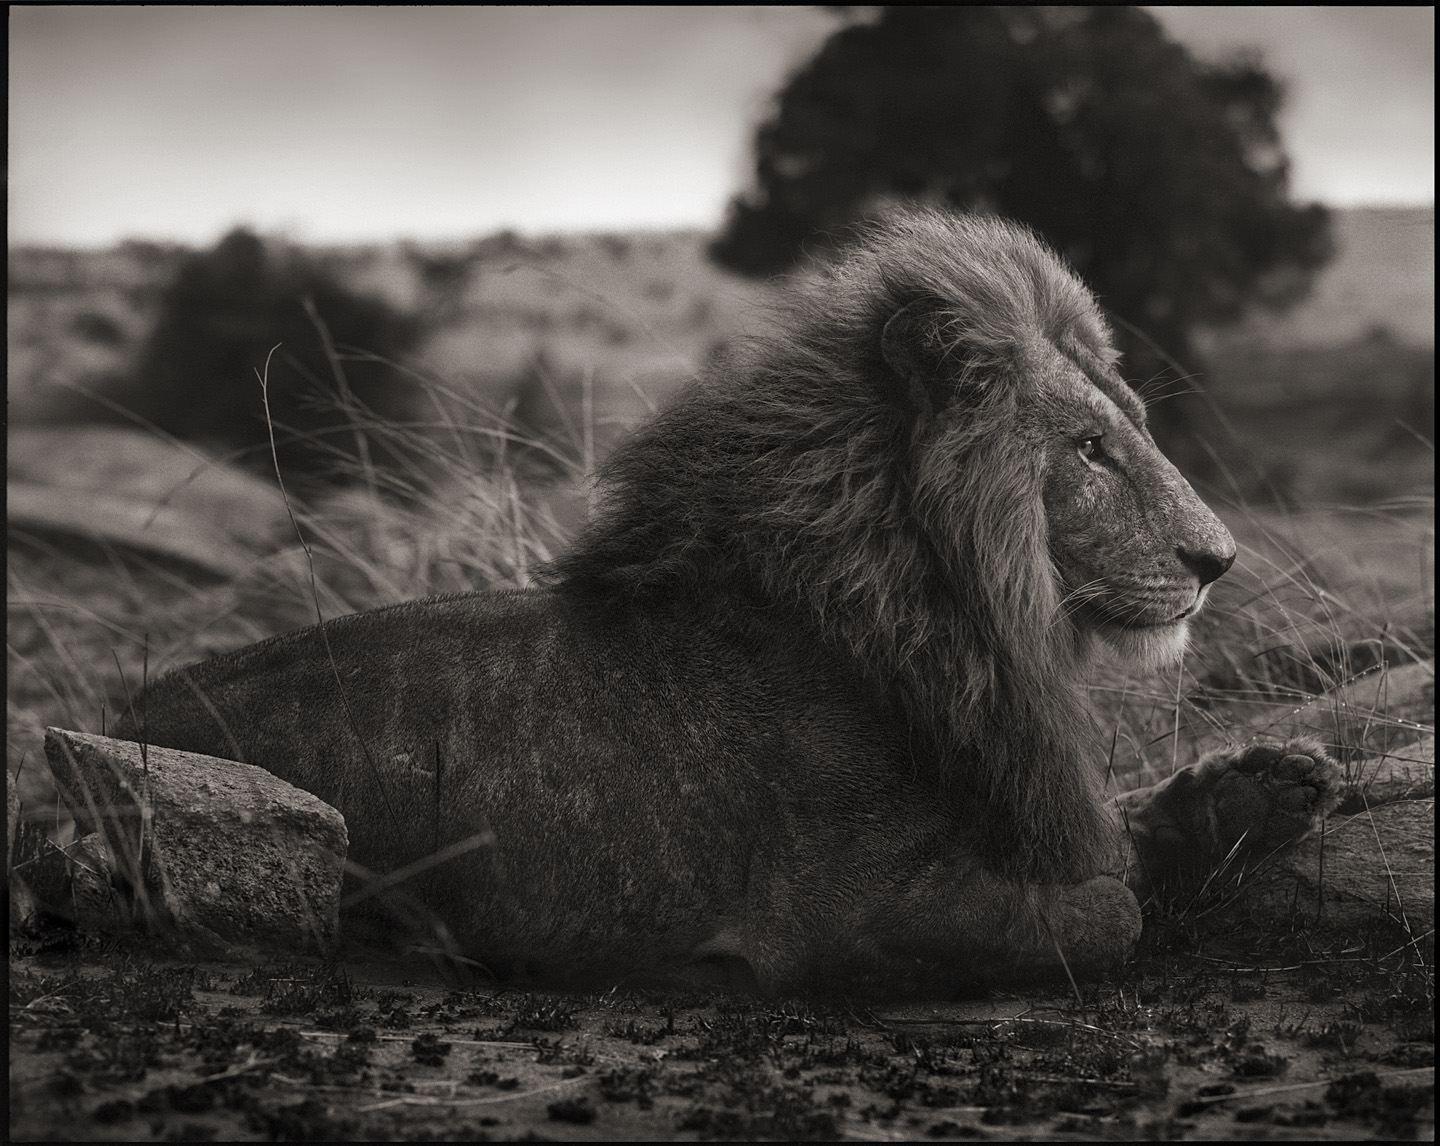 Nick Brandt Black and White Photograph - Lion on Burned Ground, Serengeti